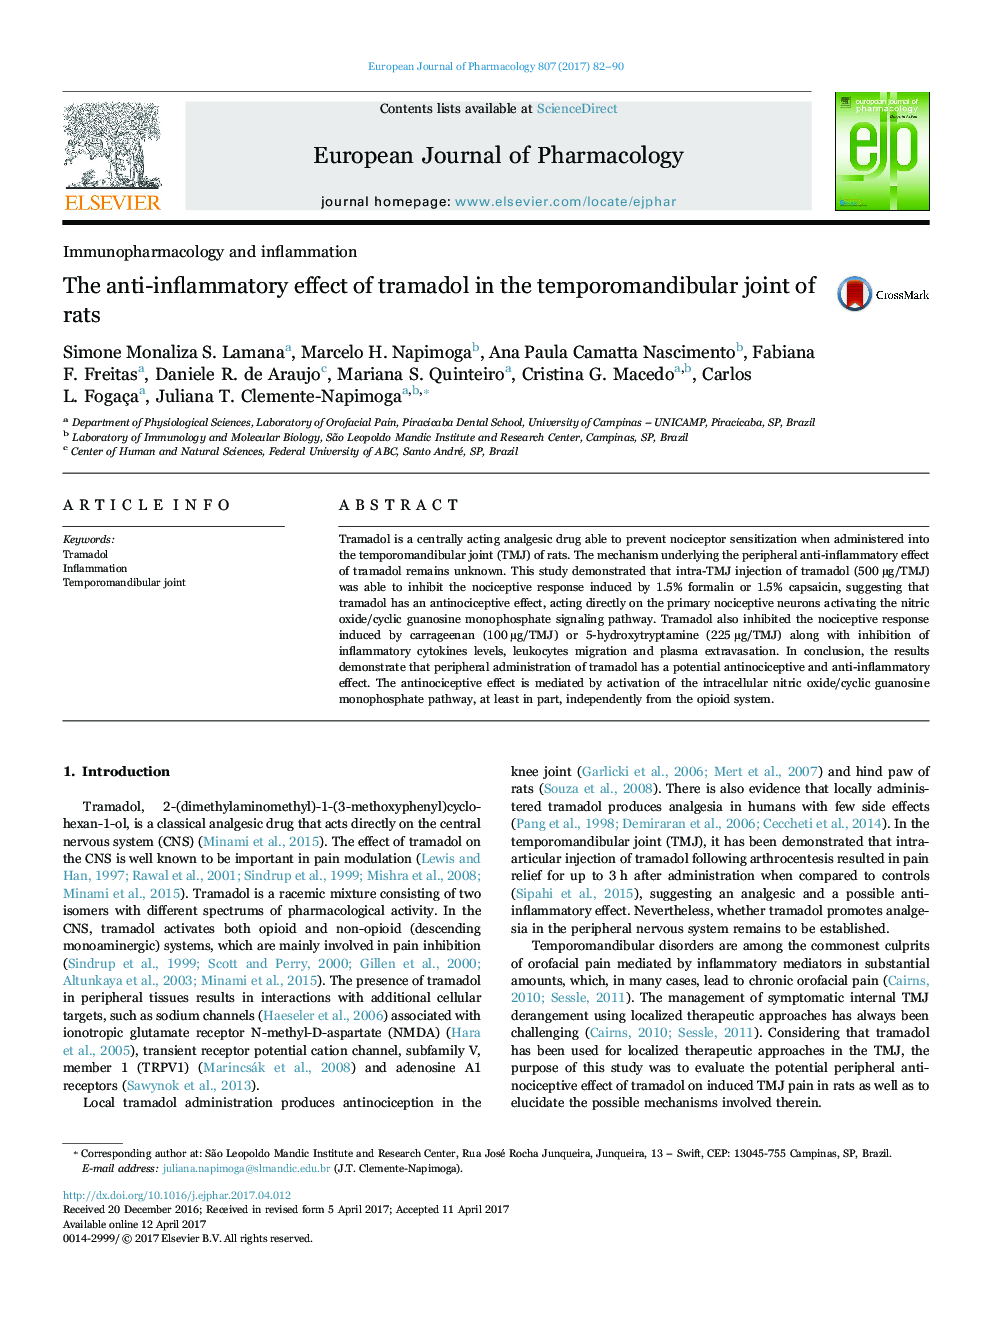 The anti-inflammatory effect of tramadol in the temporomandibular joint of rats